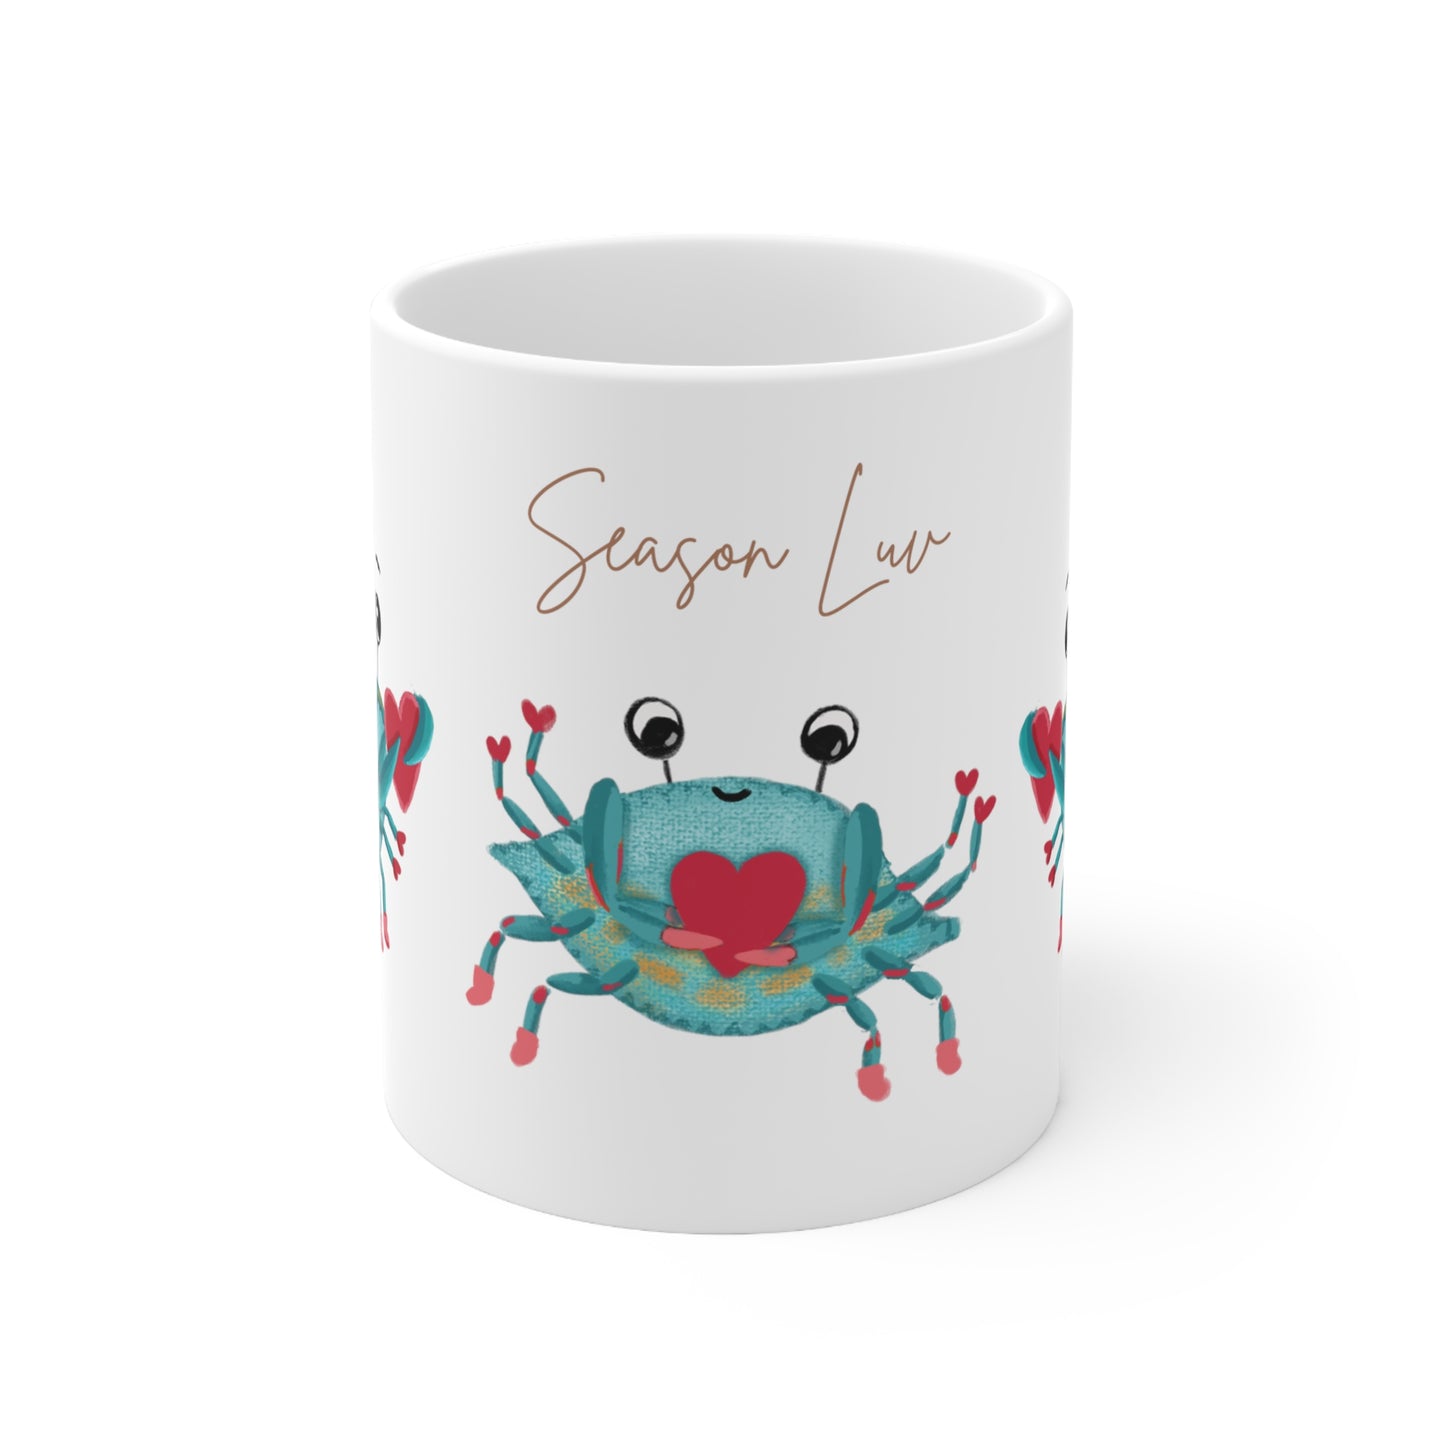 3 Blue Crabs in Love Ceramic Mug 11oz